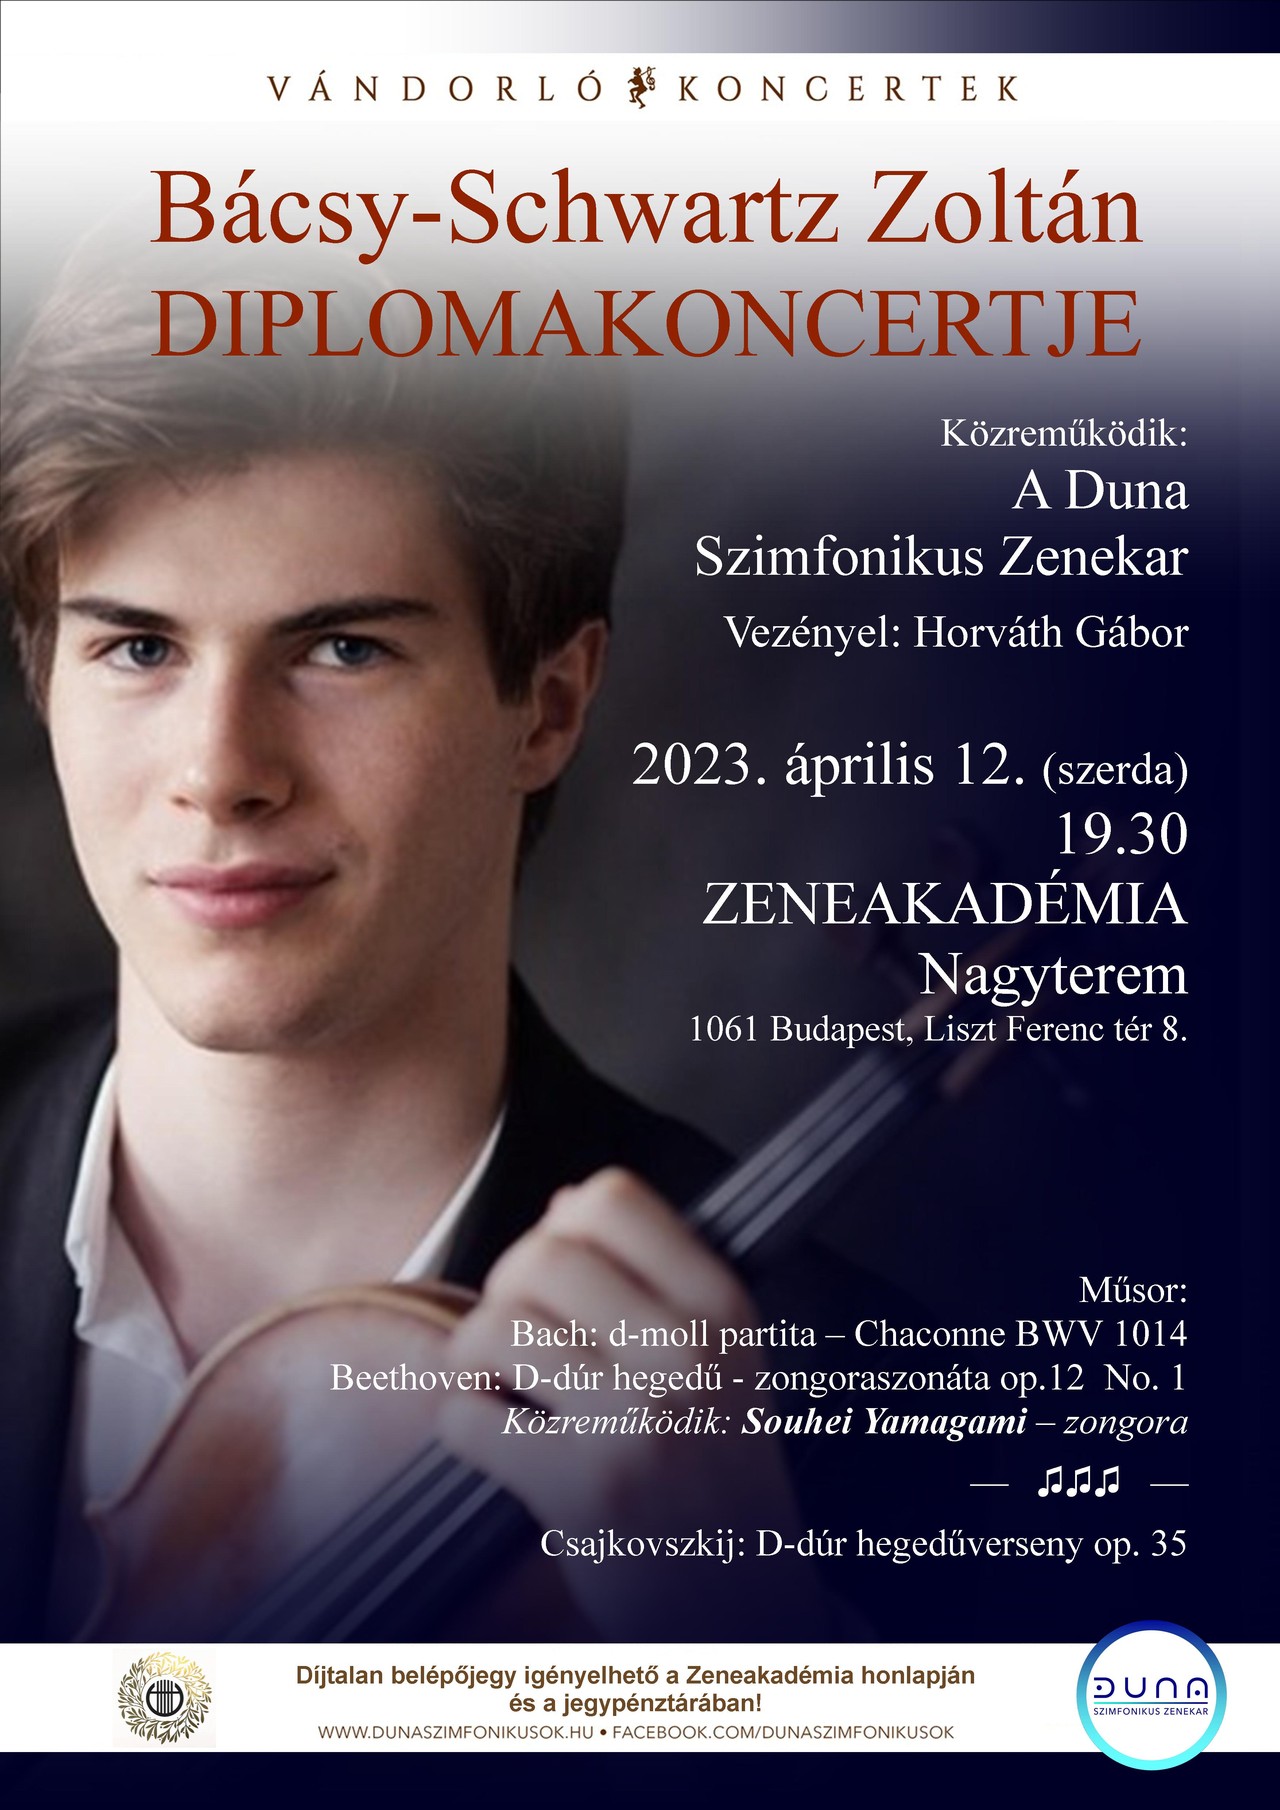 Bácsy-Schwartz Zoltán hegedű MA diplomakoncertje kép